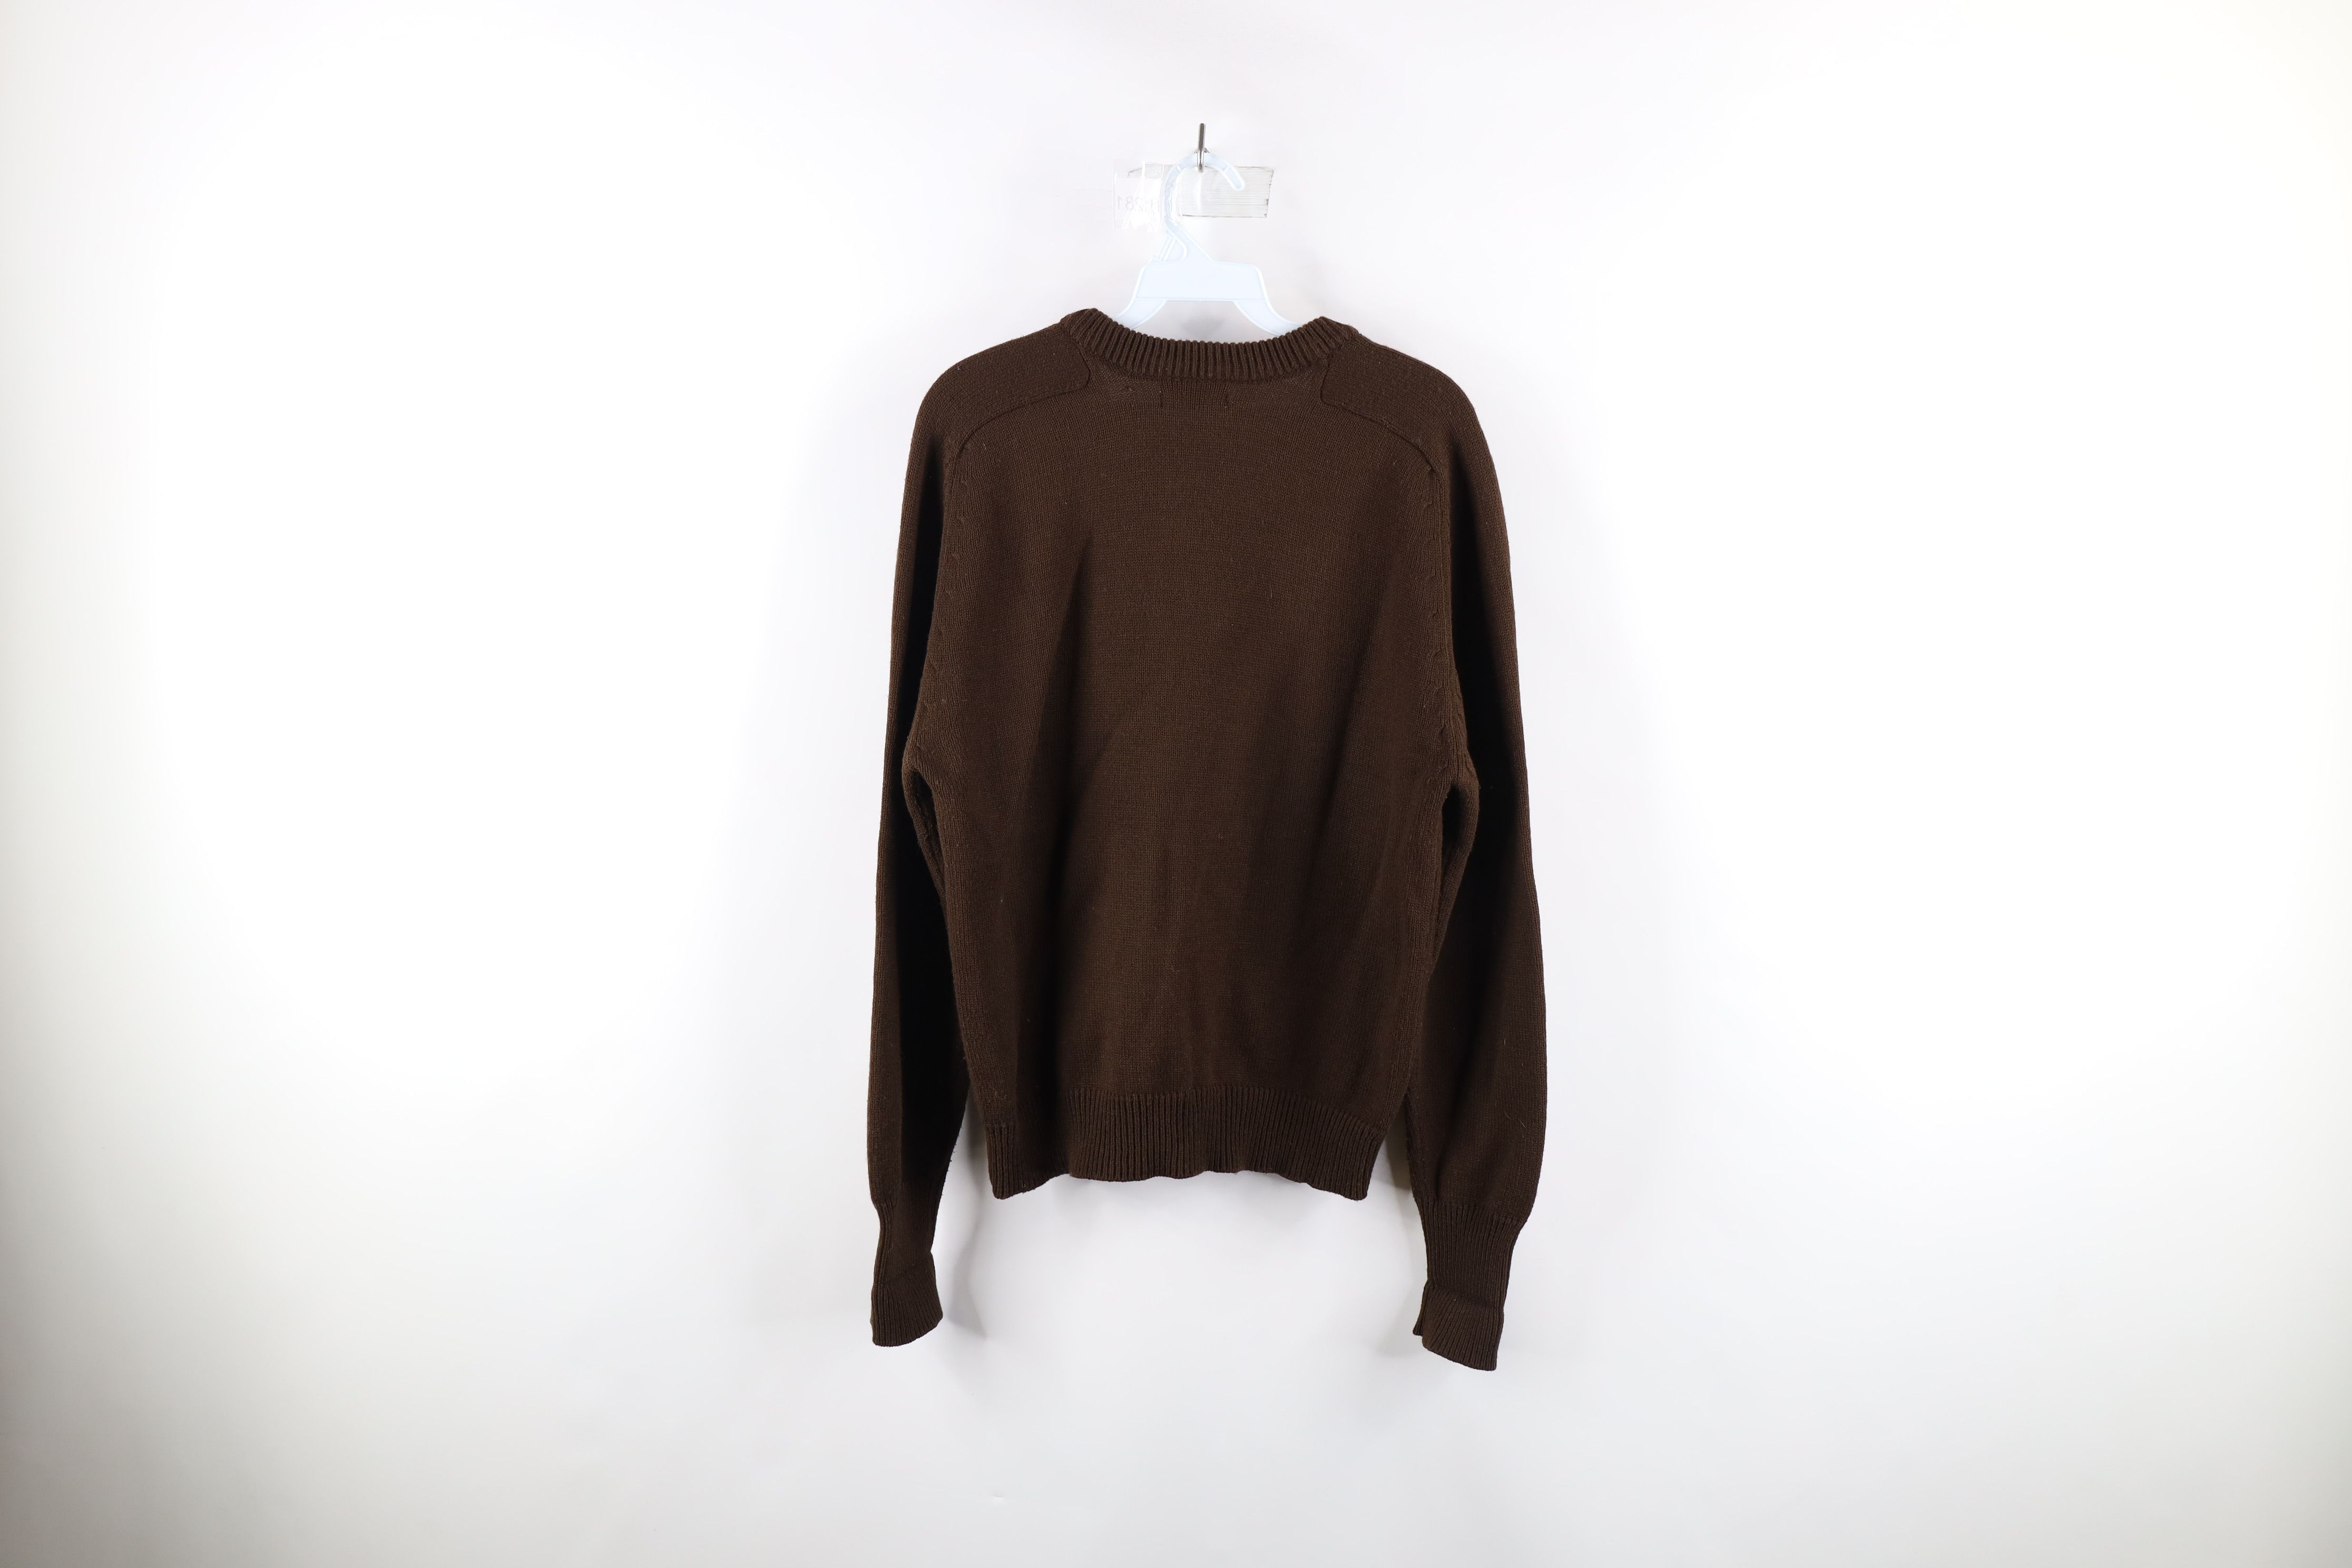 Vintage Vintage 70s Streetwear Blank Knit V-Neck Sweater Brown Size M / US 6-8 / IT 42-44 - 5 Thumbnail